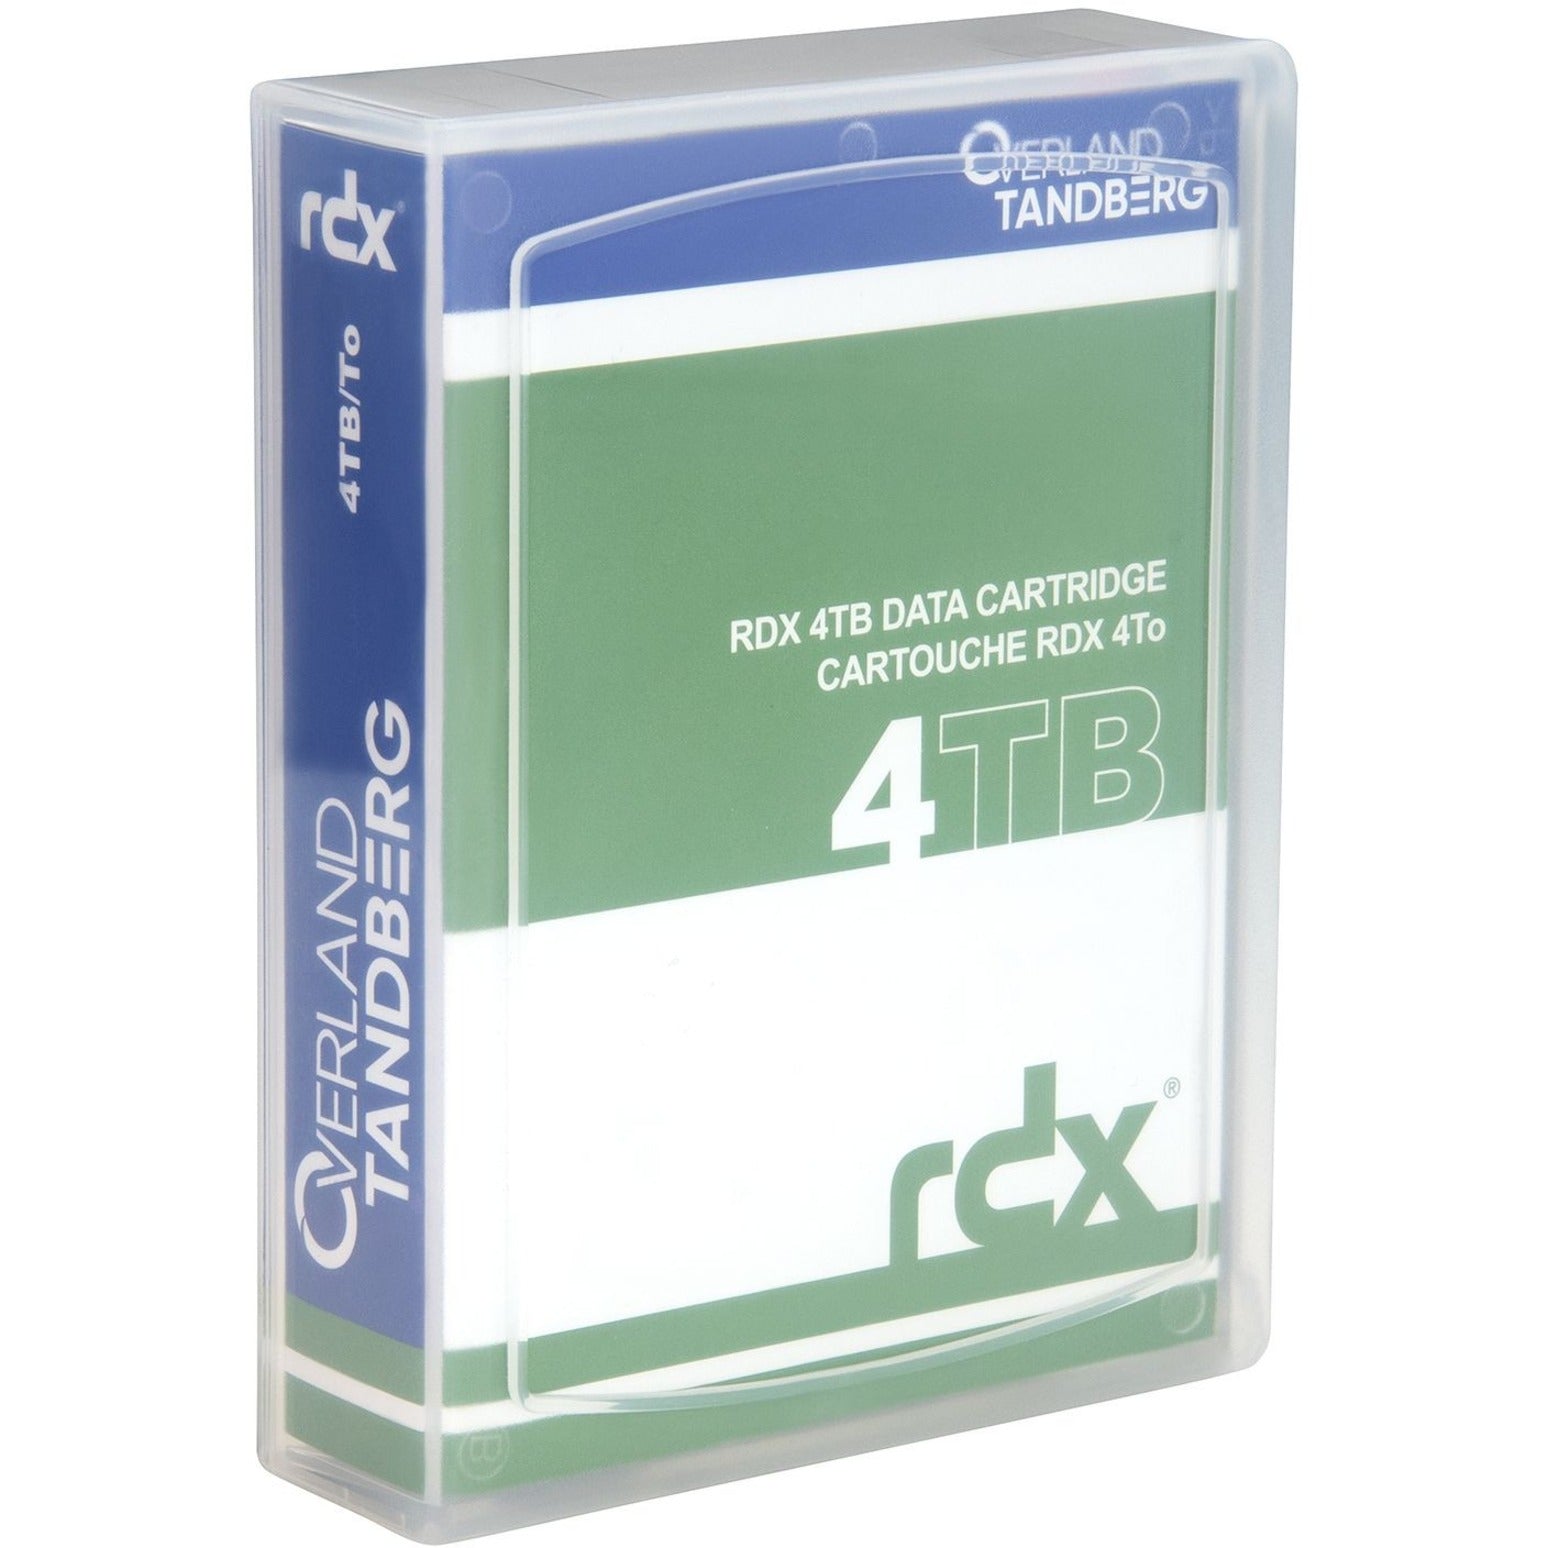 Overland-Tandberg 8824-RDX RDX QuikStor Hard Drive Cartridge, 4TB Storage Capacity